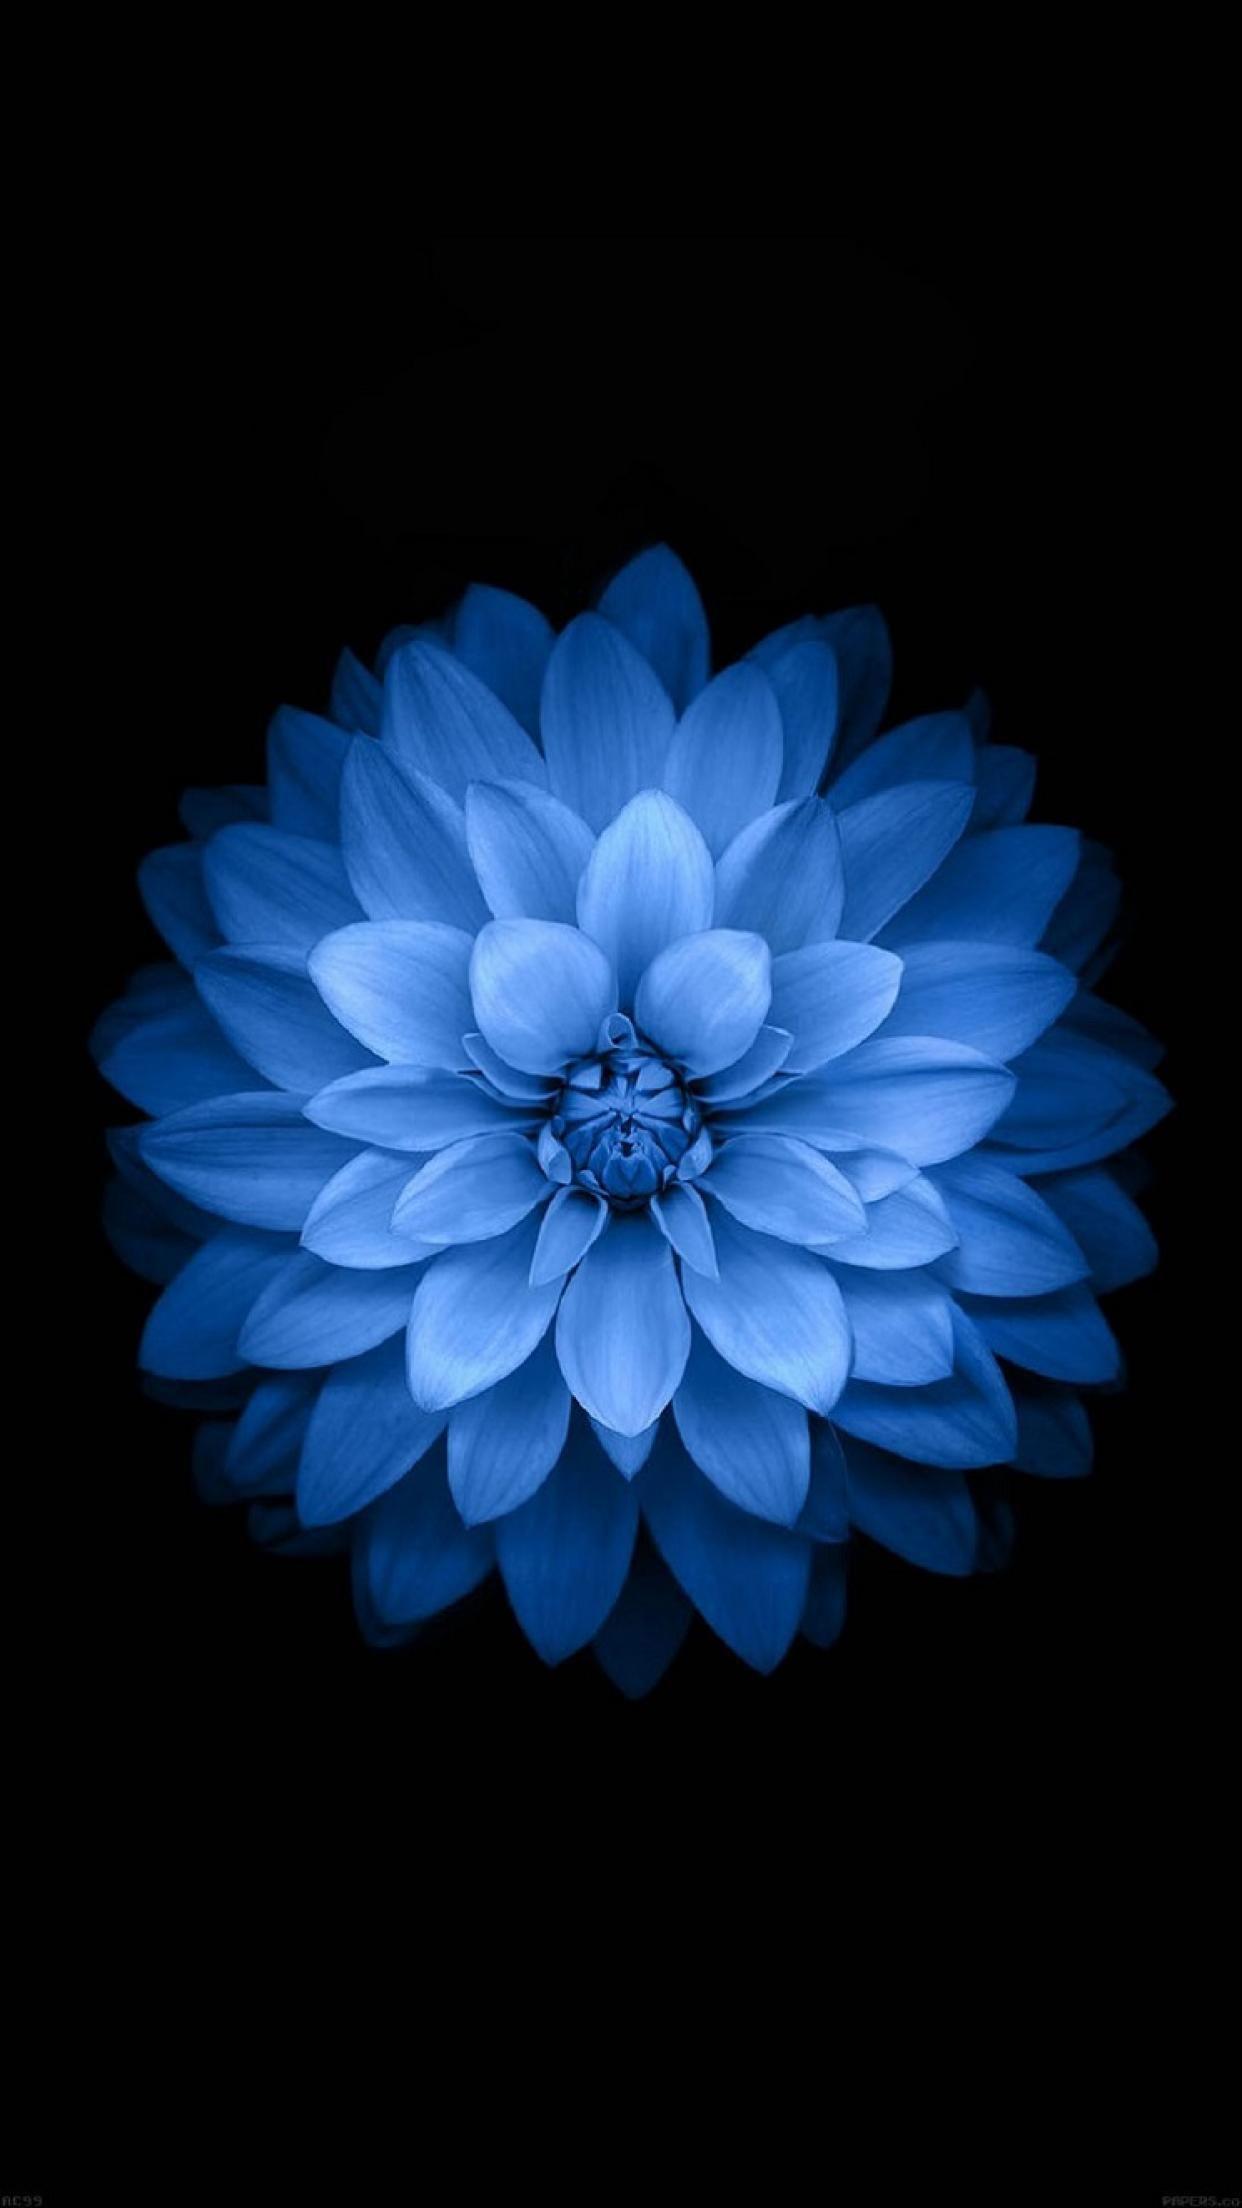 500 Blue Flower Pictures HD  Download Free Images on Unsplash